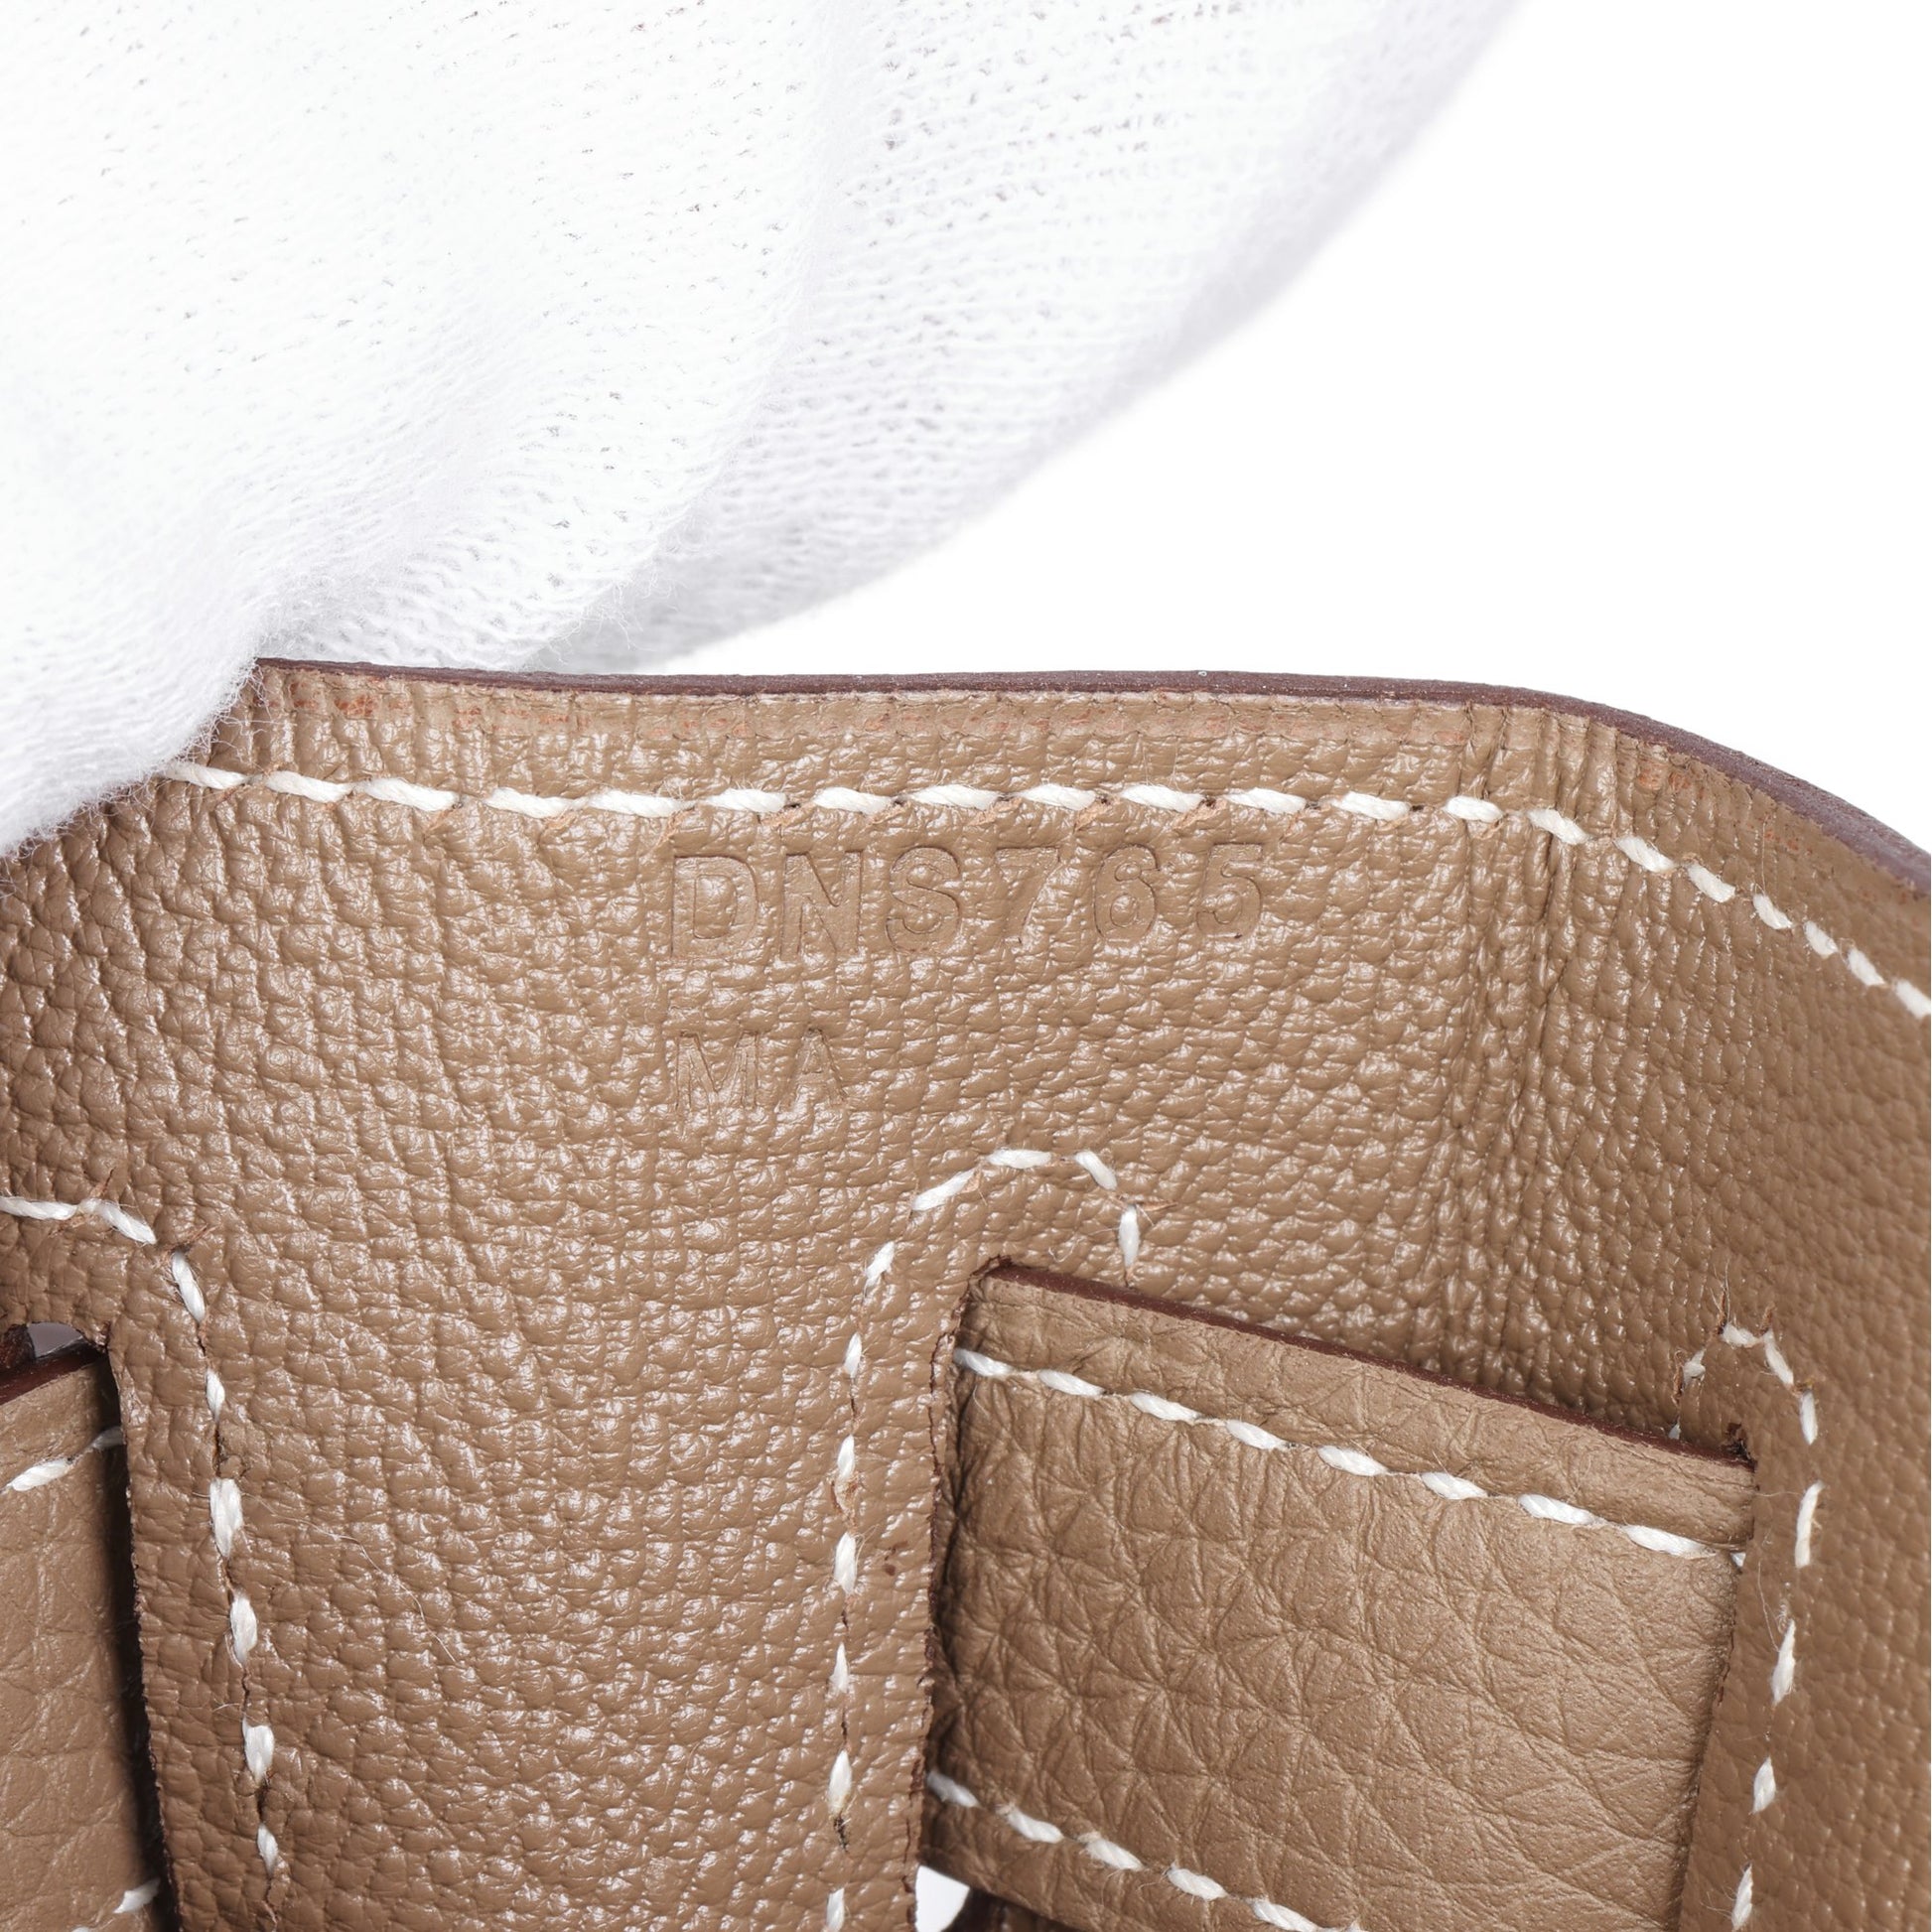 Hermes Gray Brown Etoupe Togo Kelly 28 Bag Handbag Shoulder Bag – MAISON de  LUXE